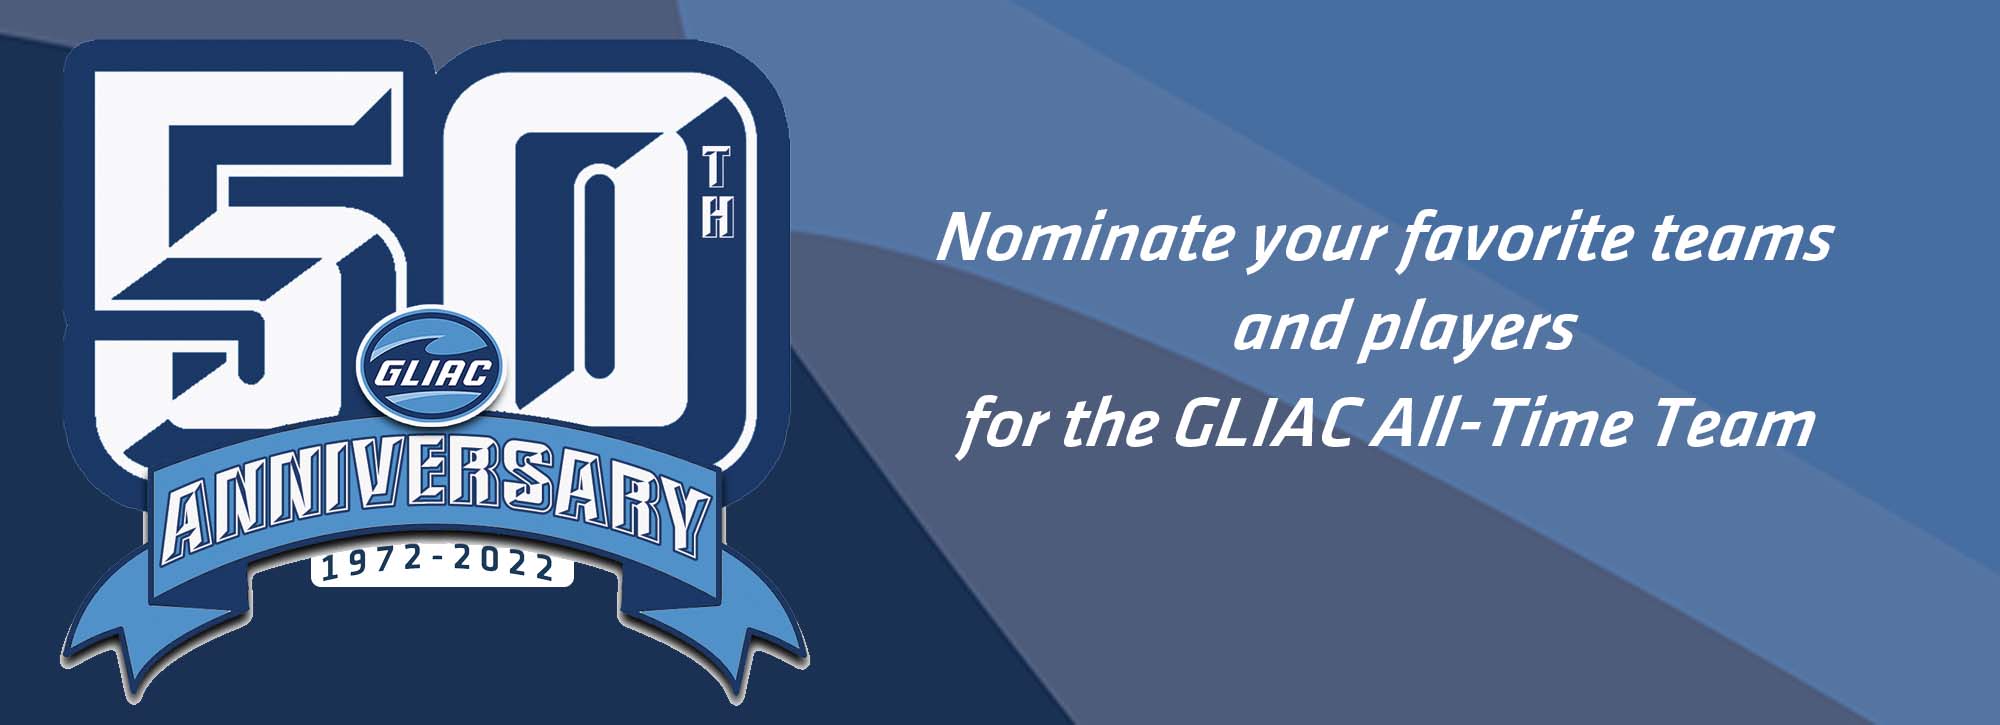 GLIAC is seeking 50th Anniversary All-Time Team nominations